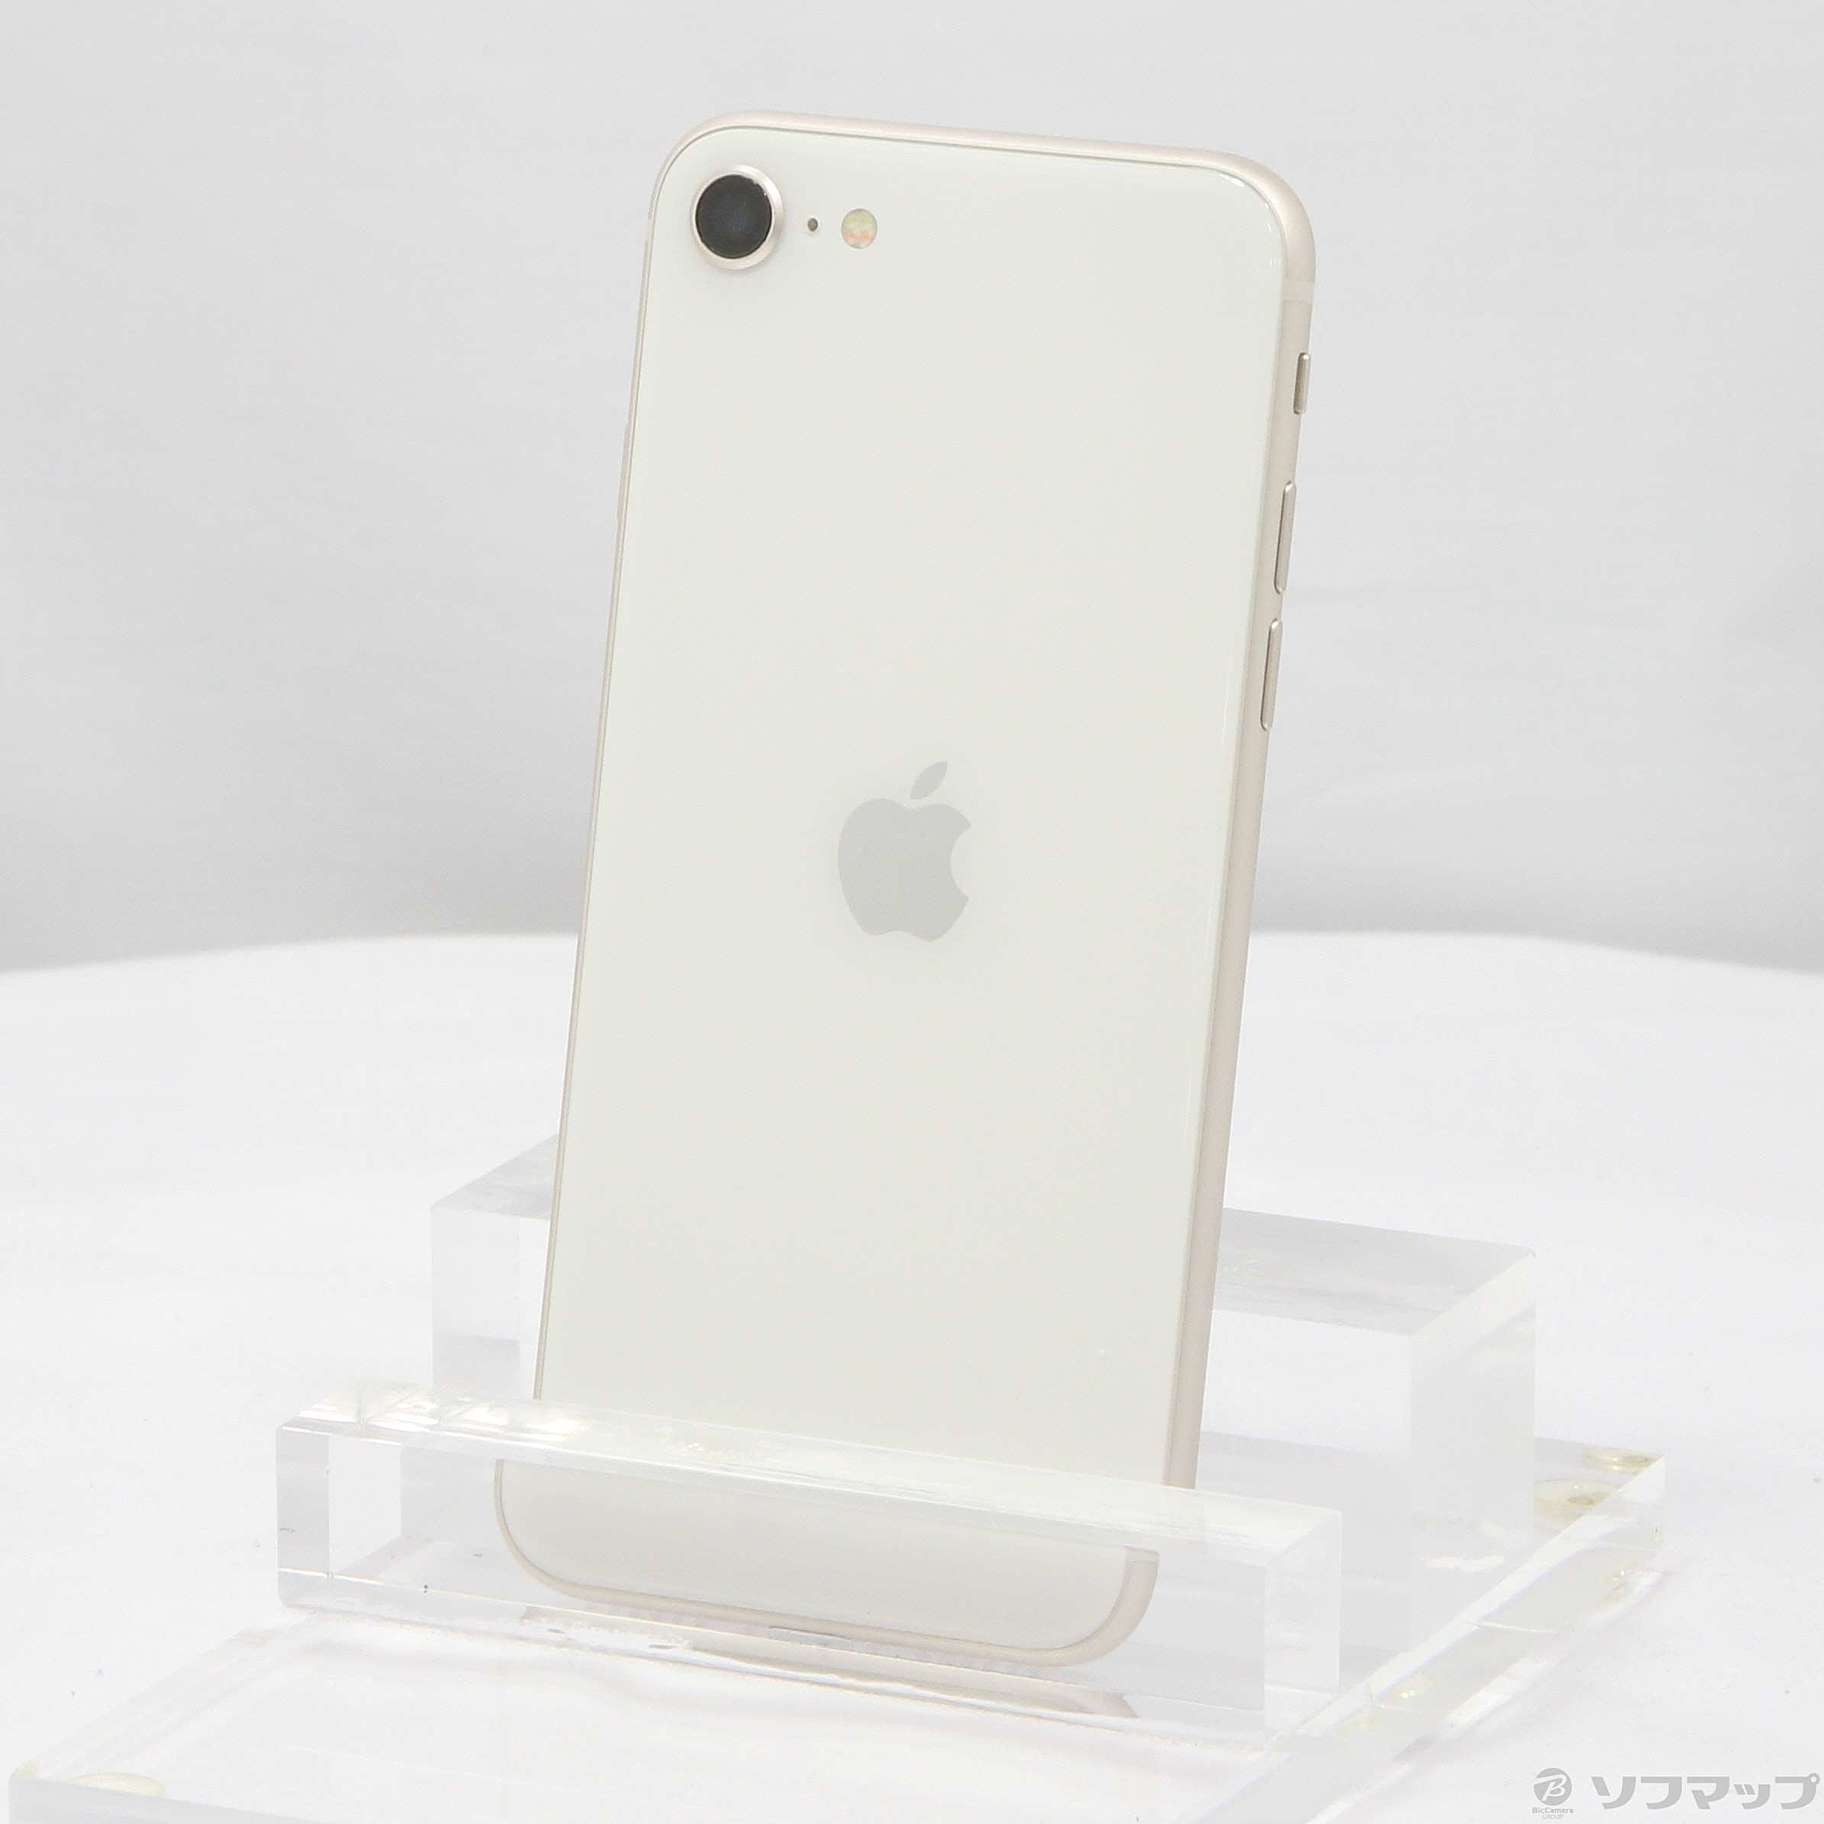 iPhone SE (第3世代) 64GB SIMフリー [スターライト] 中古(白ロム)価格 ...